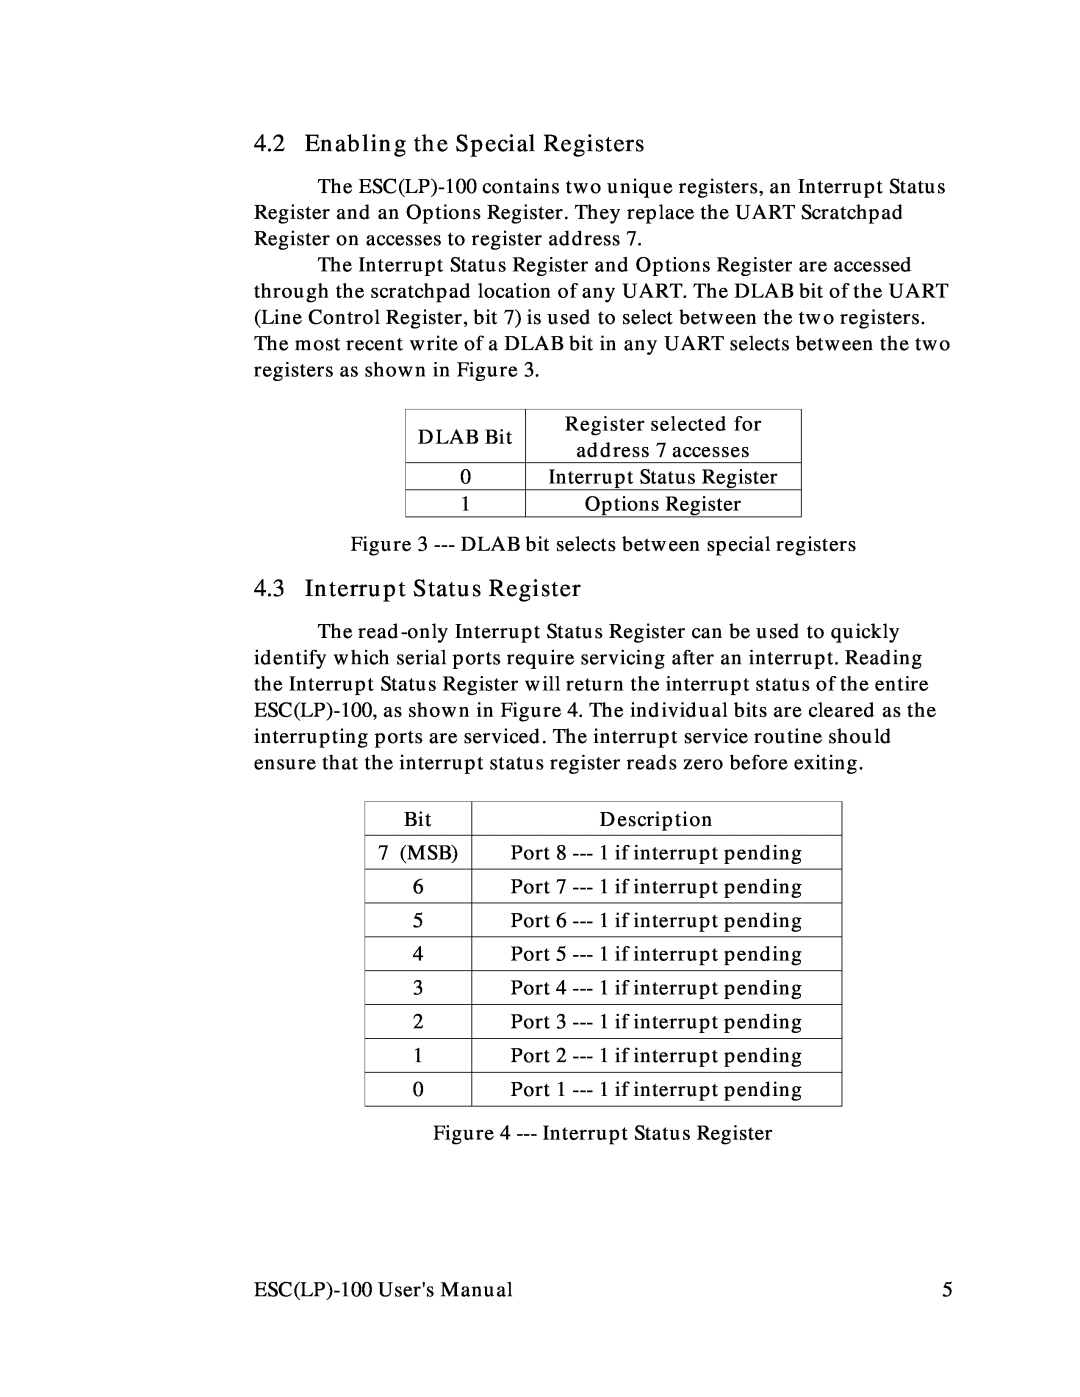 Quatech RS-232 Enabling the Special Registers, Interrupt Status Register, DLAB Bit, Register selected for, Description 